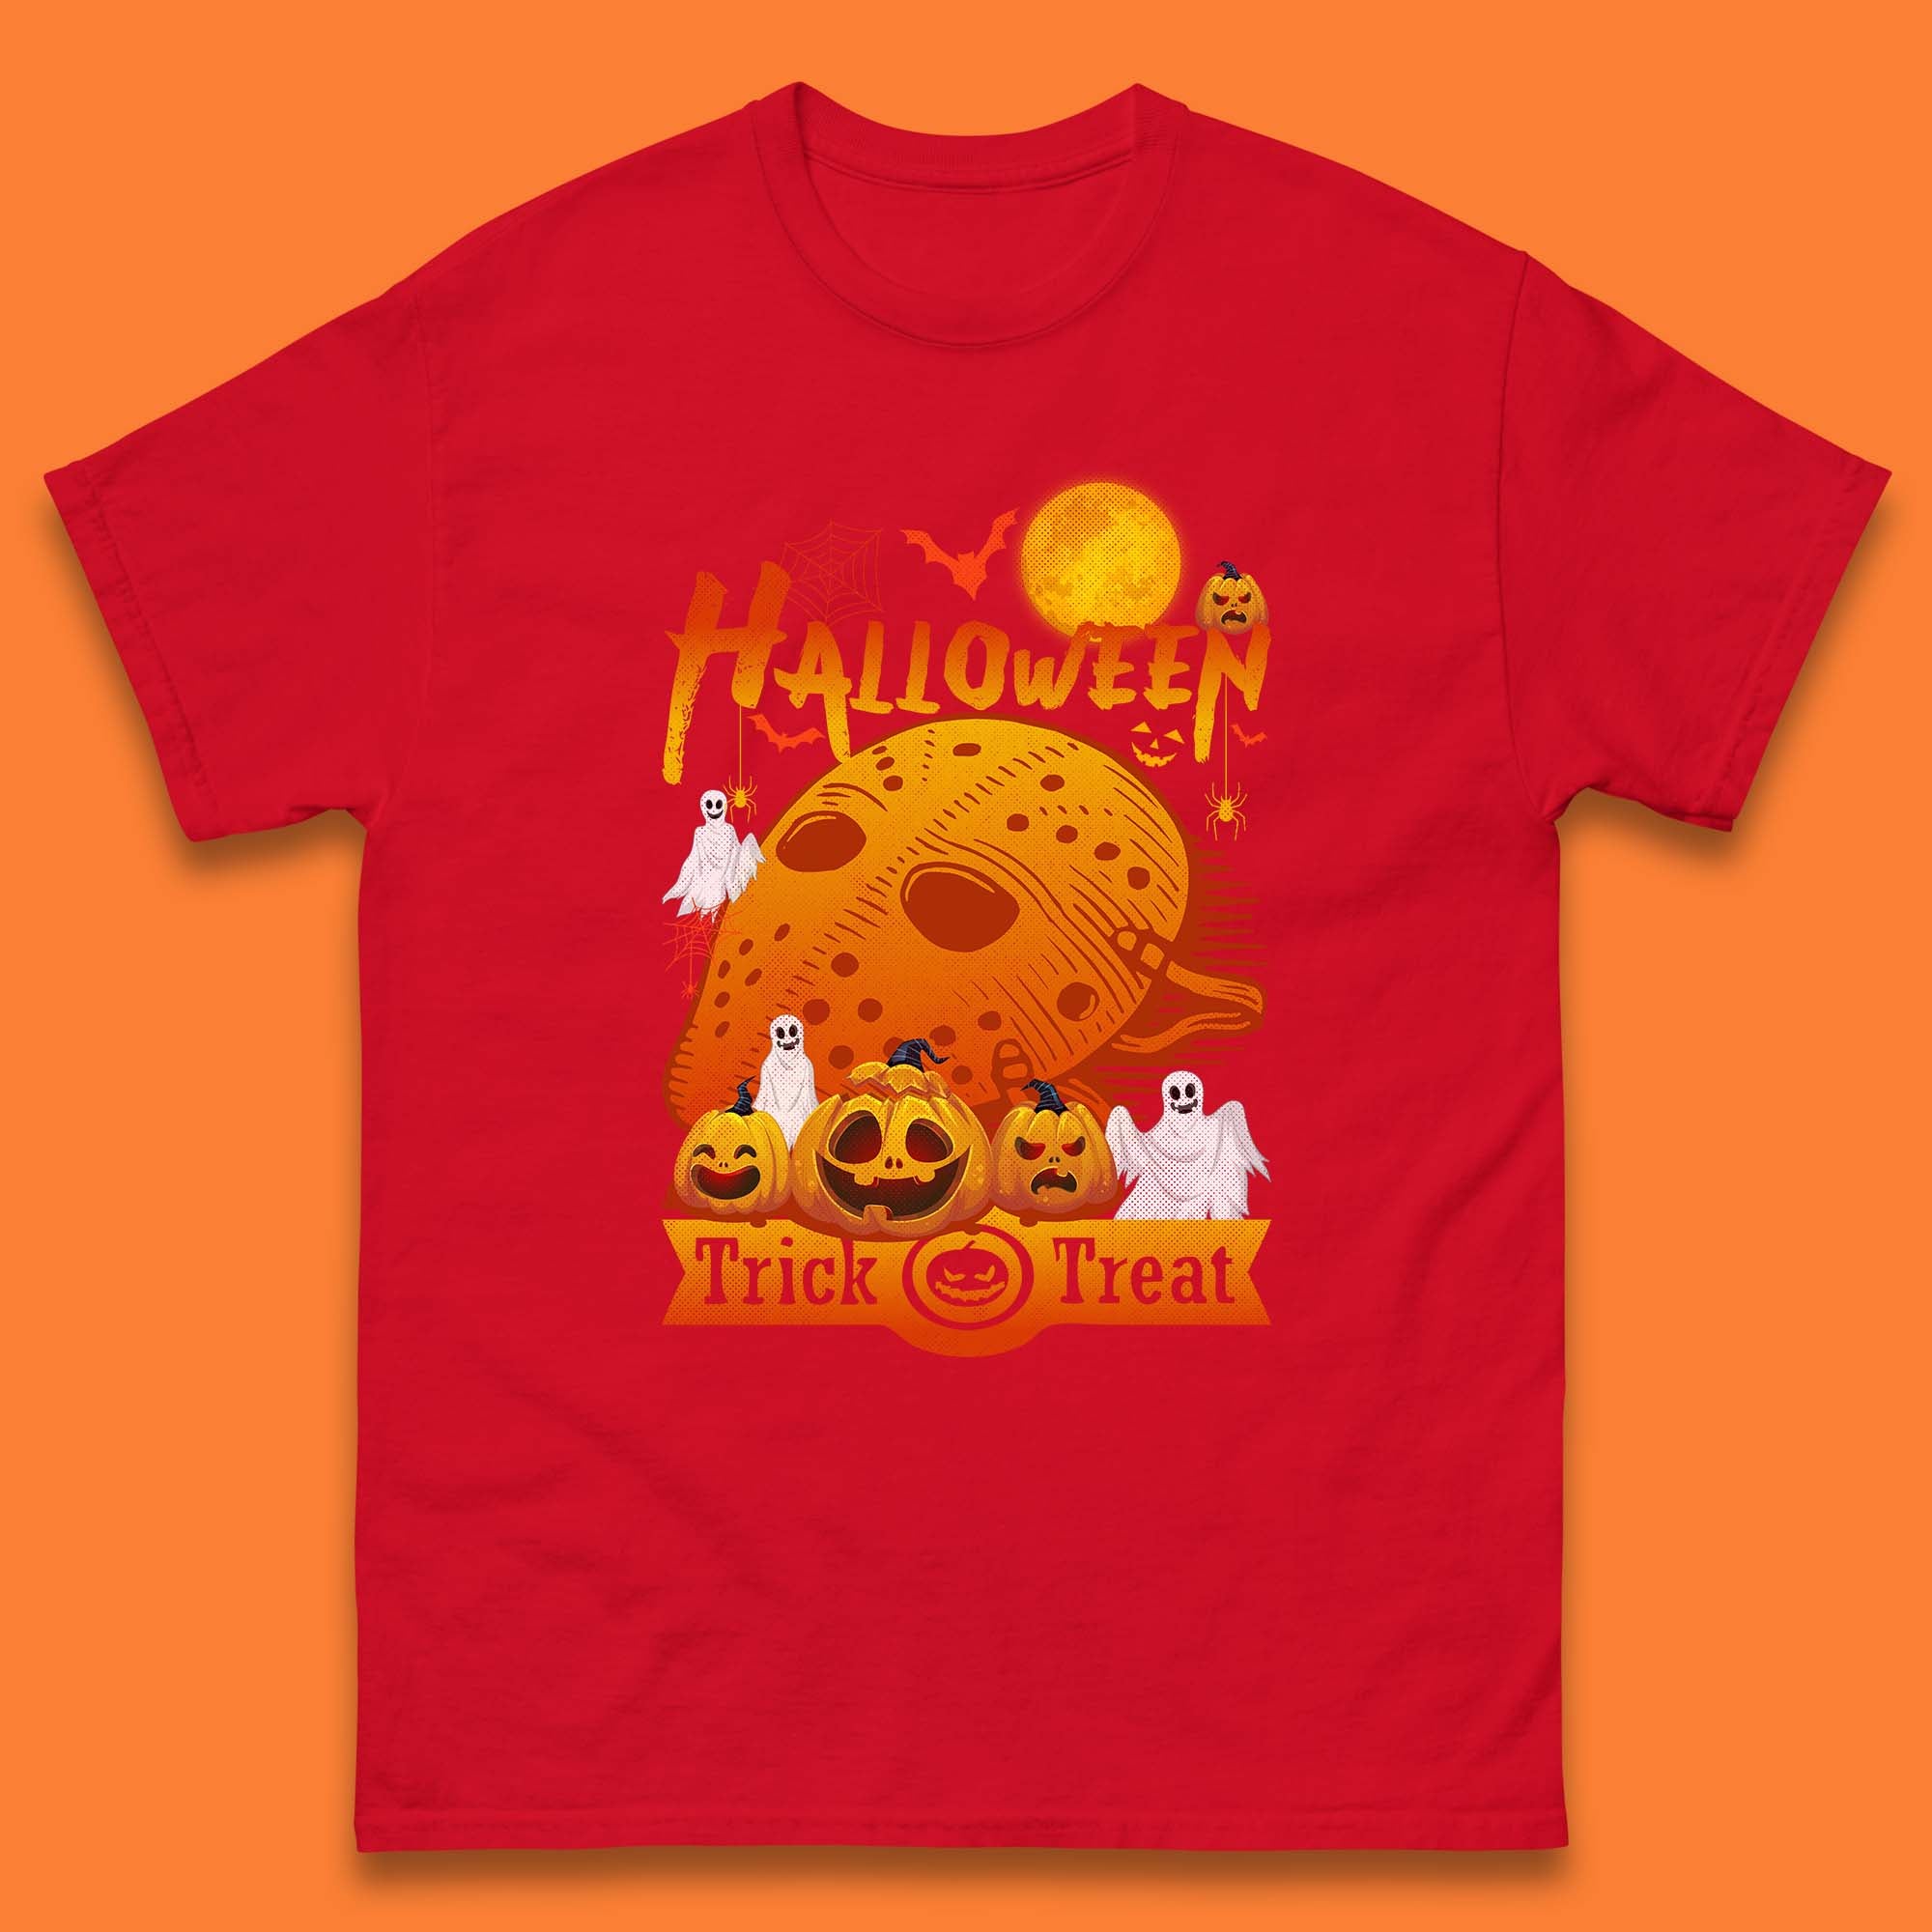 Happy Halloween Jason Voorhees Face Mask Halloween Friday The 13th Horror Movie Halloween Pumpkins Mens Tee Top